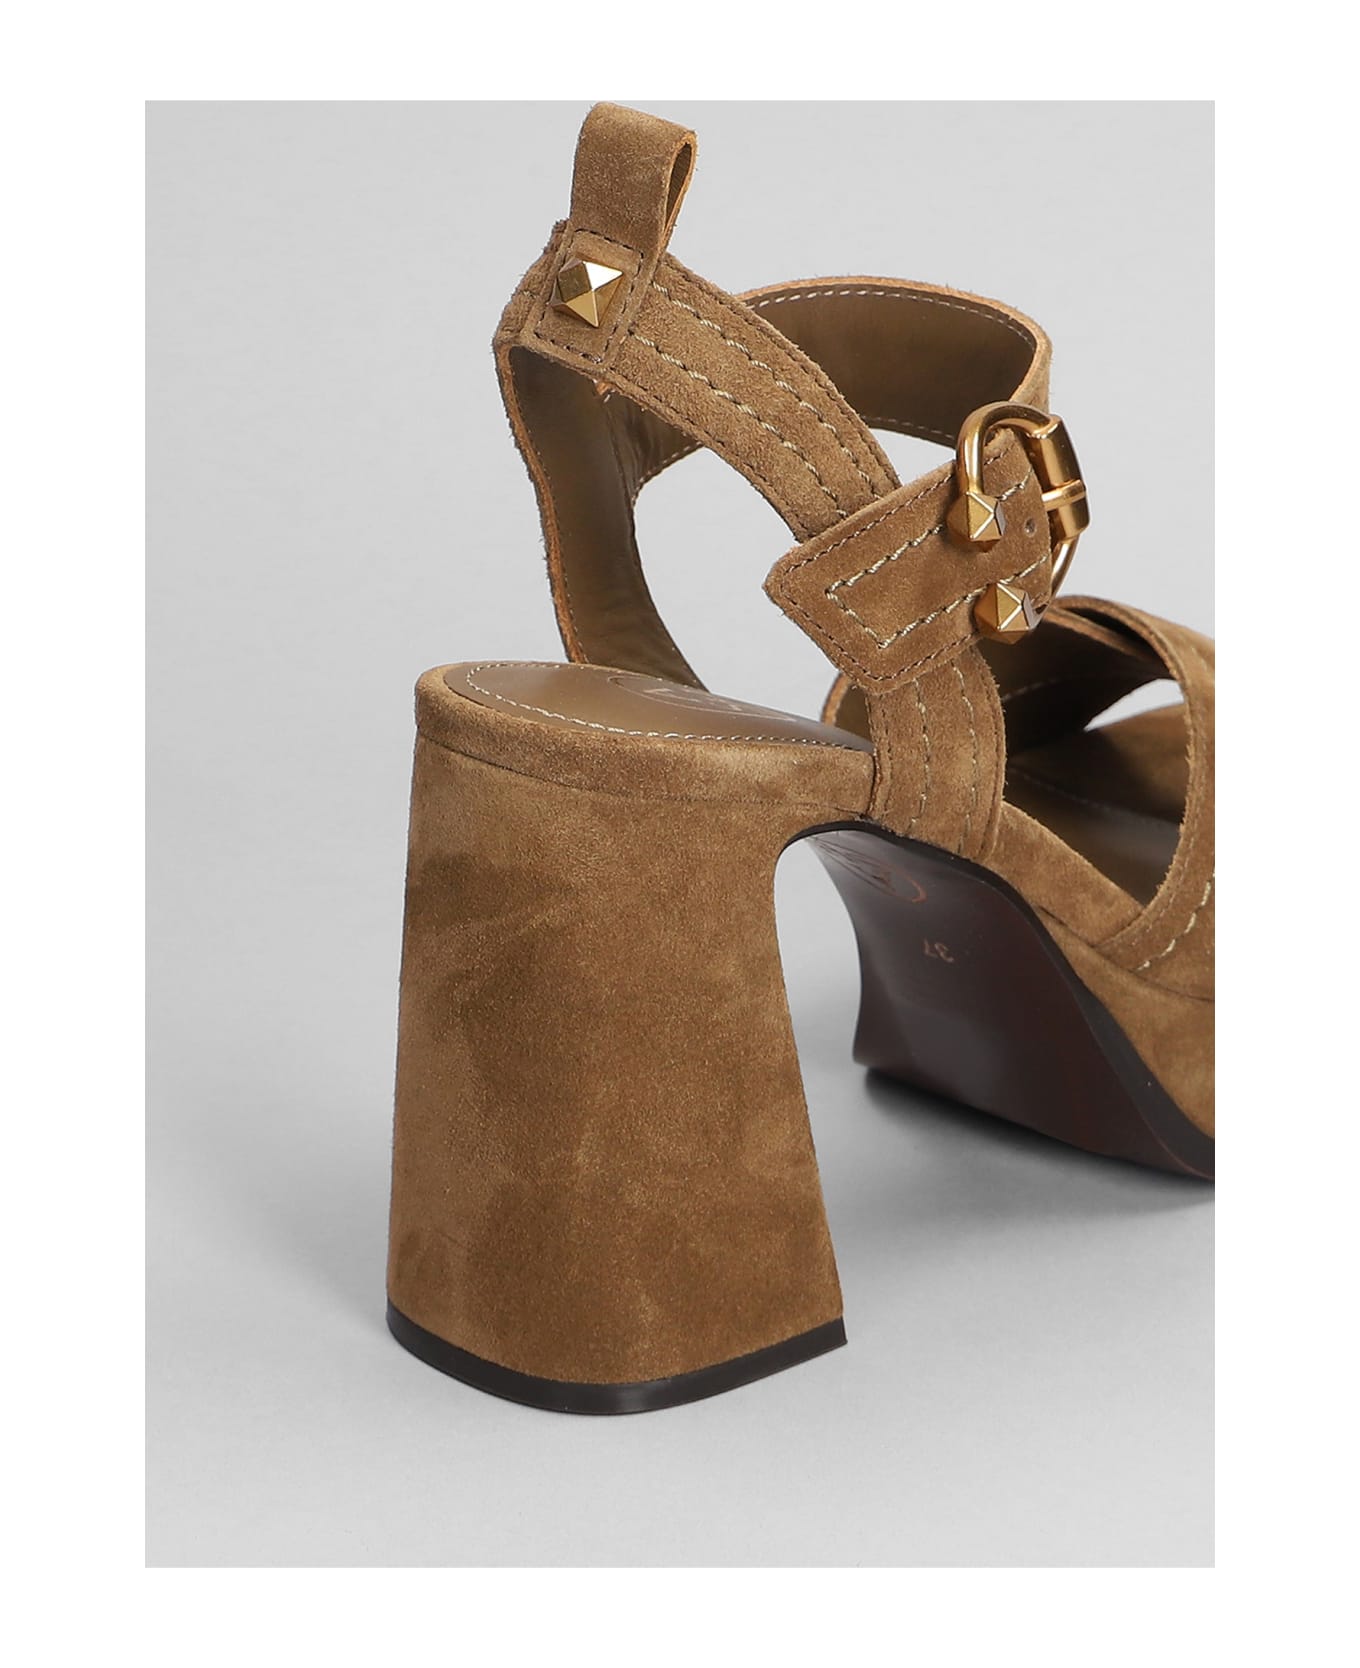 Ash Melany Sandals In Brown Suede - brown